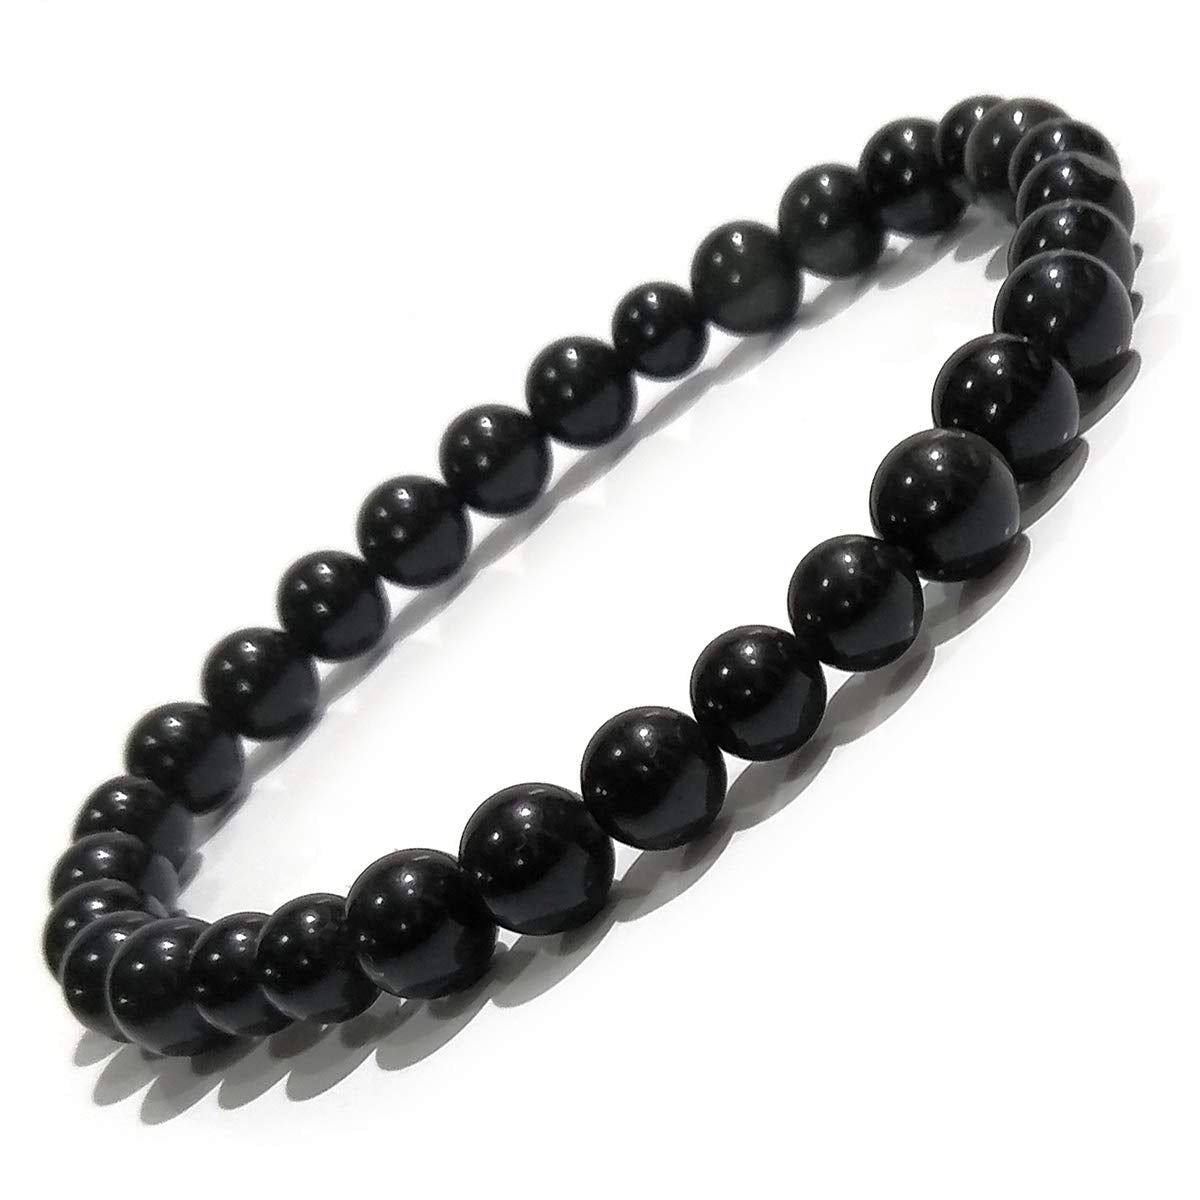 Healing Crystals - Wholesale Black Obsidian Bracelet